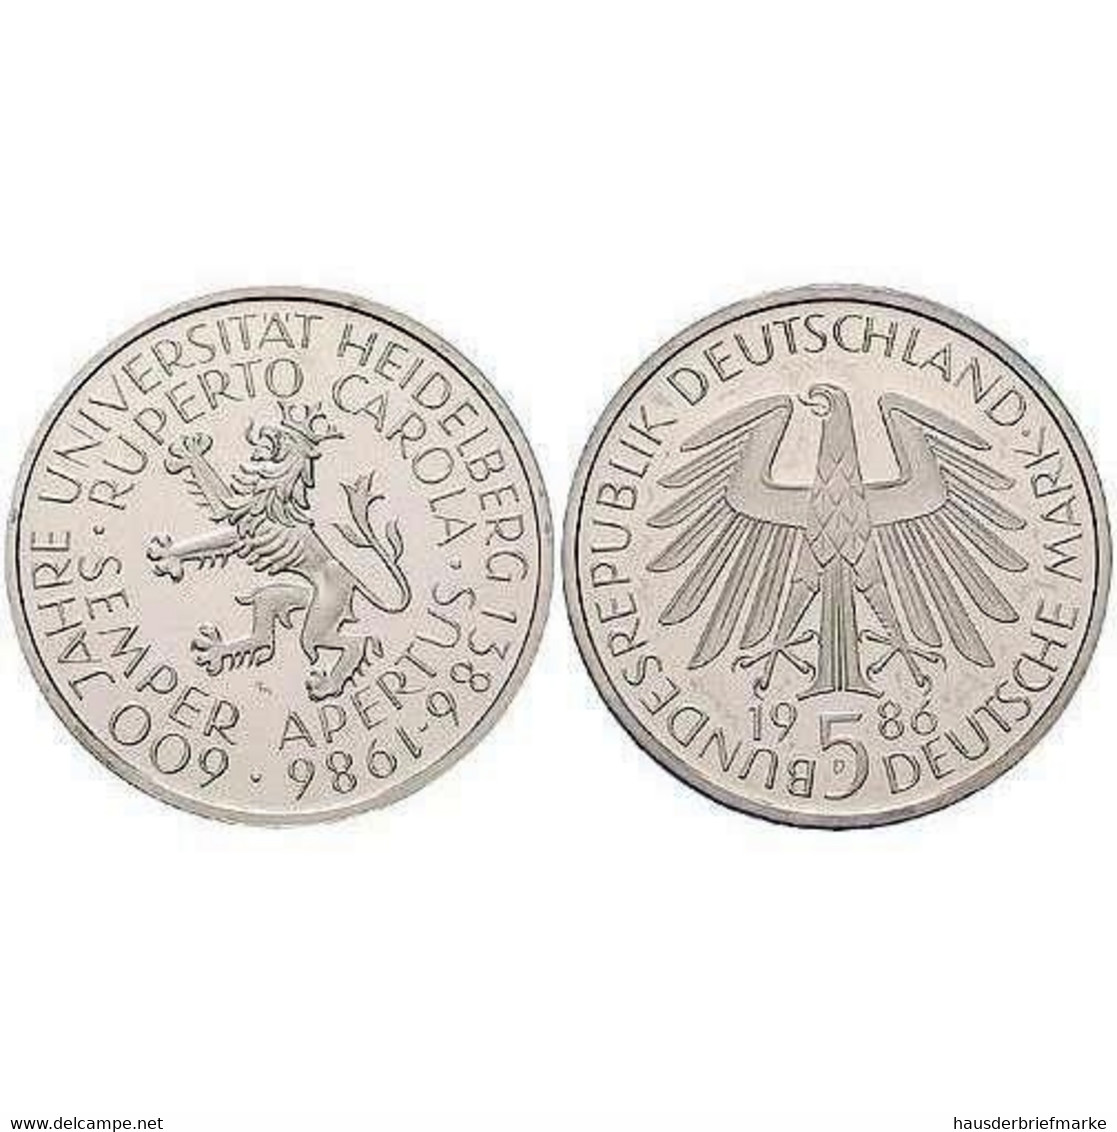 5 DM Ruprecht-Karls-Universität Heidelberg 1986 Stempelglanz - 5 Mark